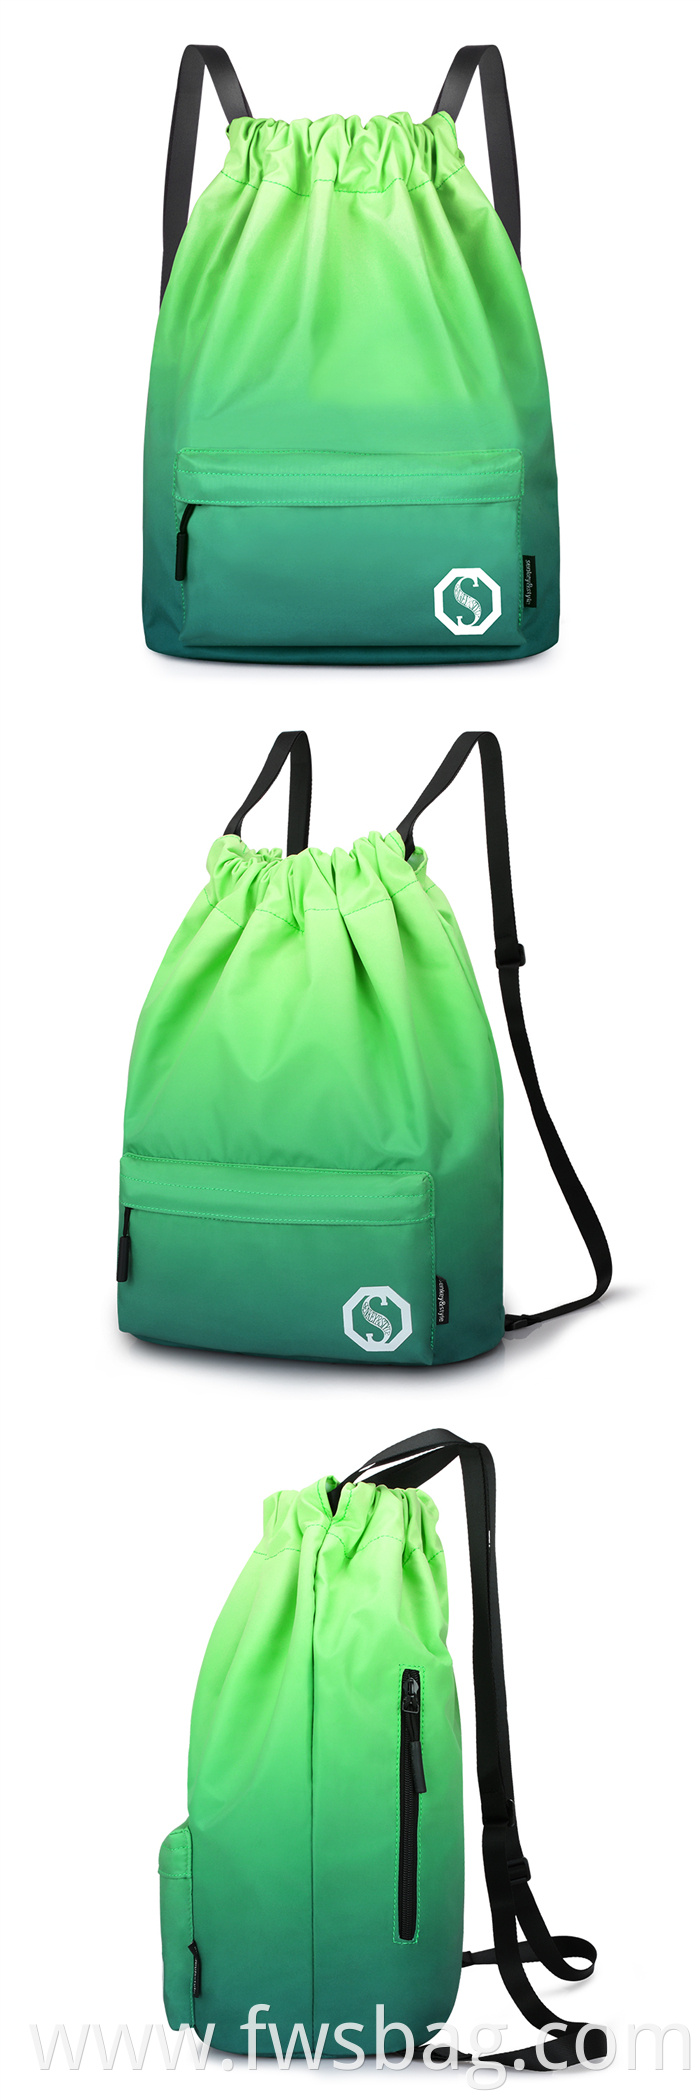 Travel School Gym Original Backpack Gradient Color Rainbow Drawstring Bag For Travel School For Beach